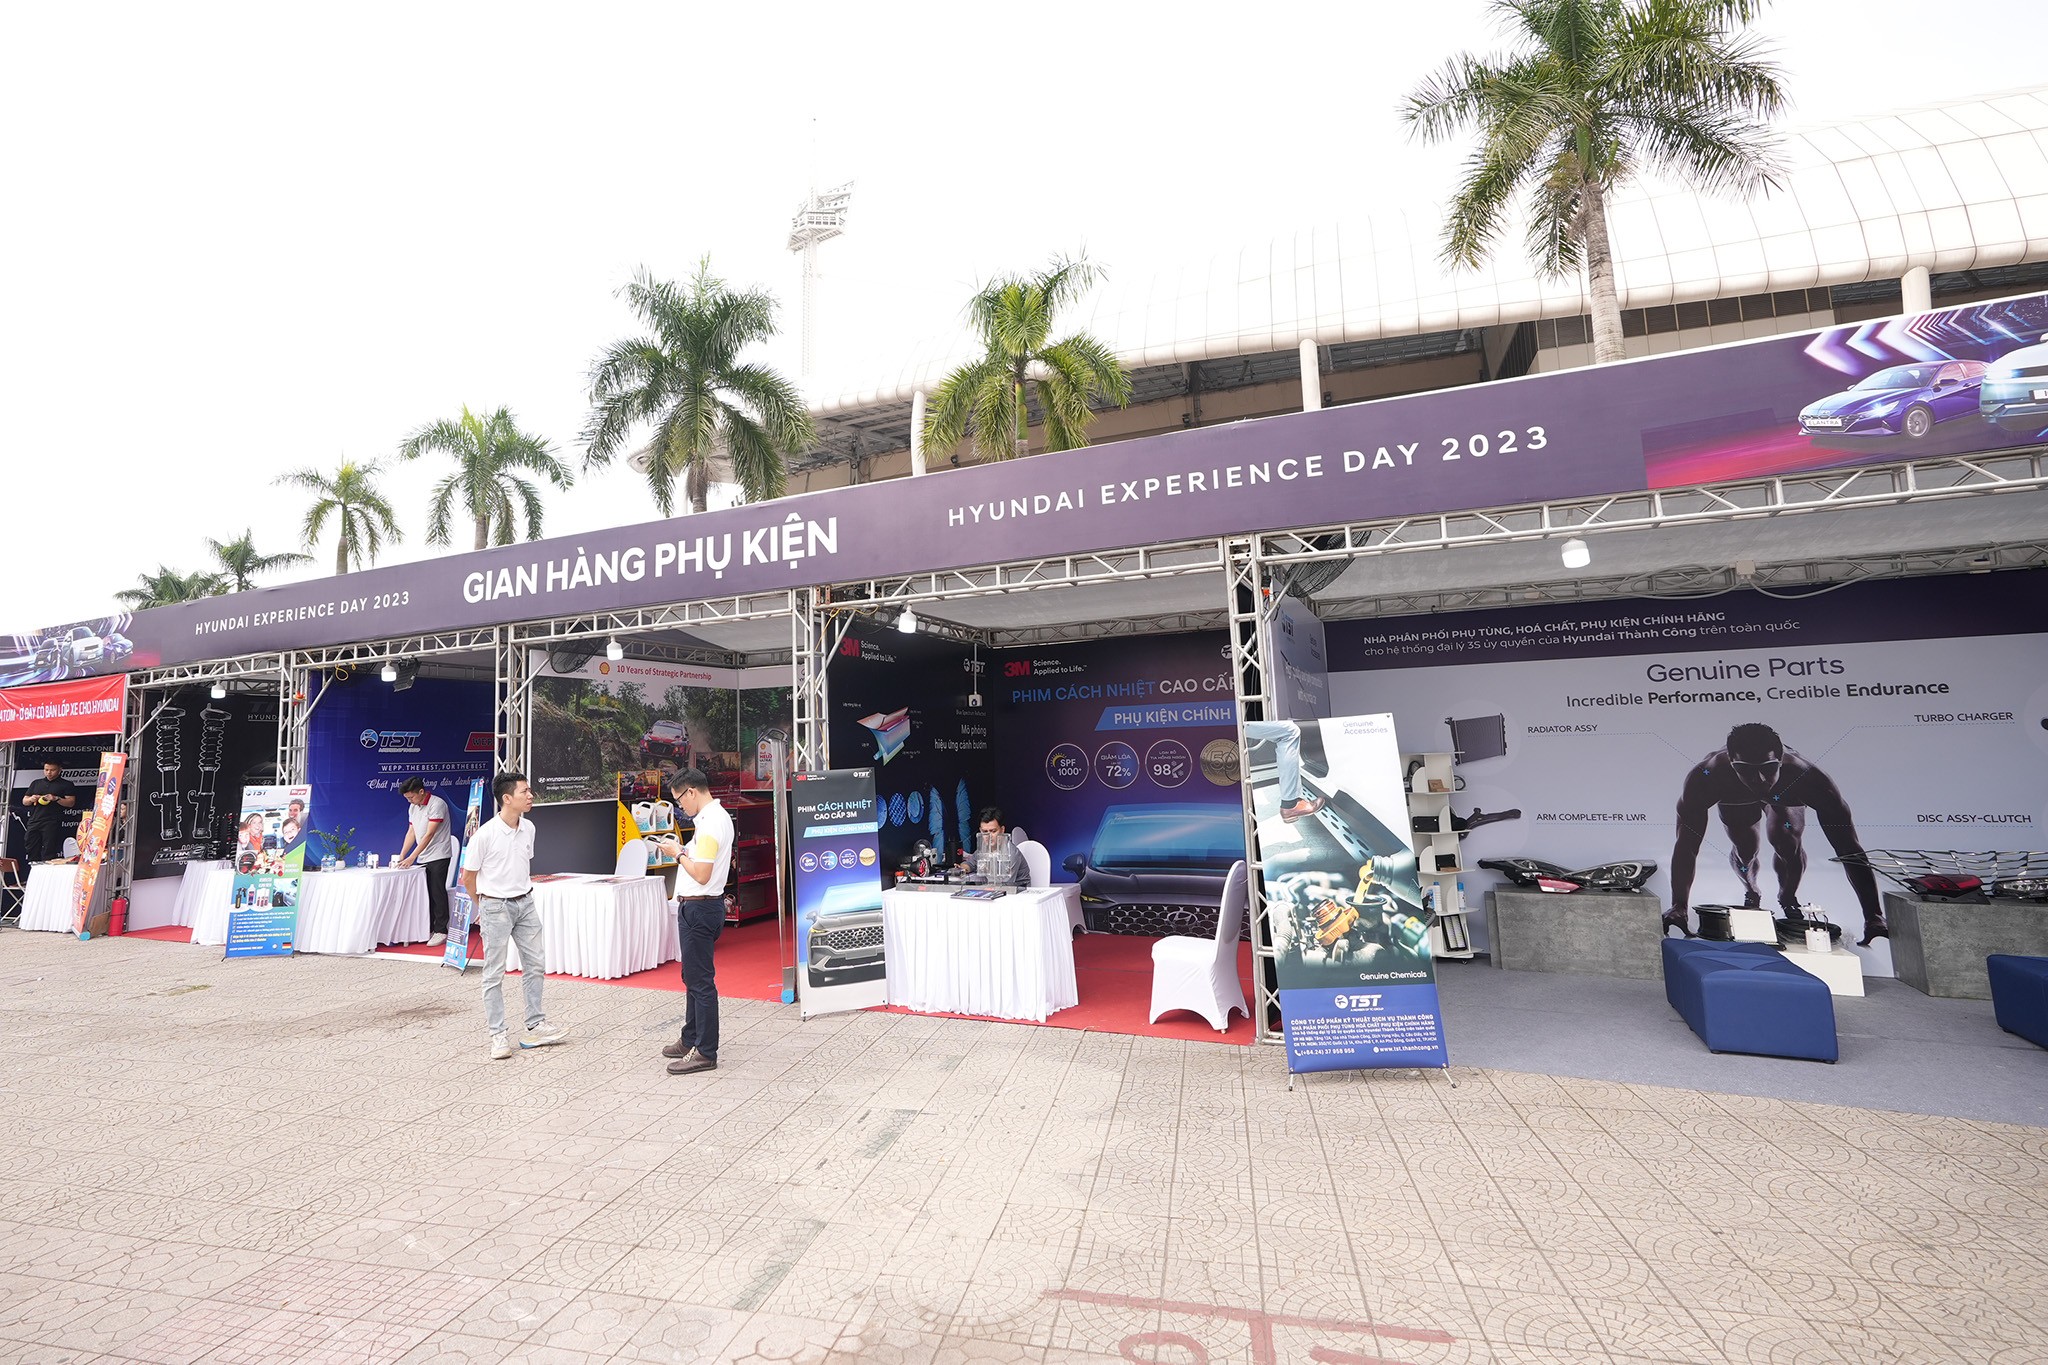 Ra Mat Hyundai Venue Trong Khuon Kho Chuong Trinh Hyundai Experience Day 2023 An Tuong Va Doc Dao 6288 6